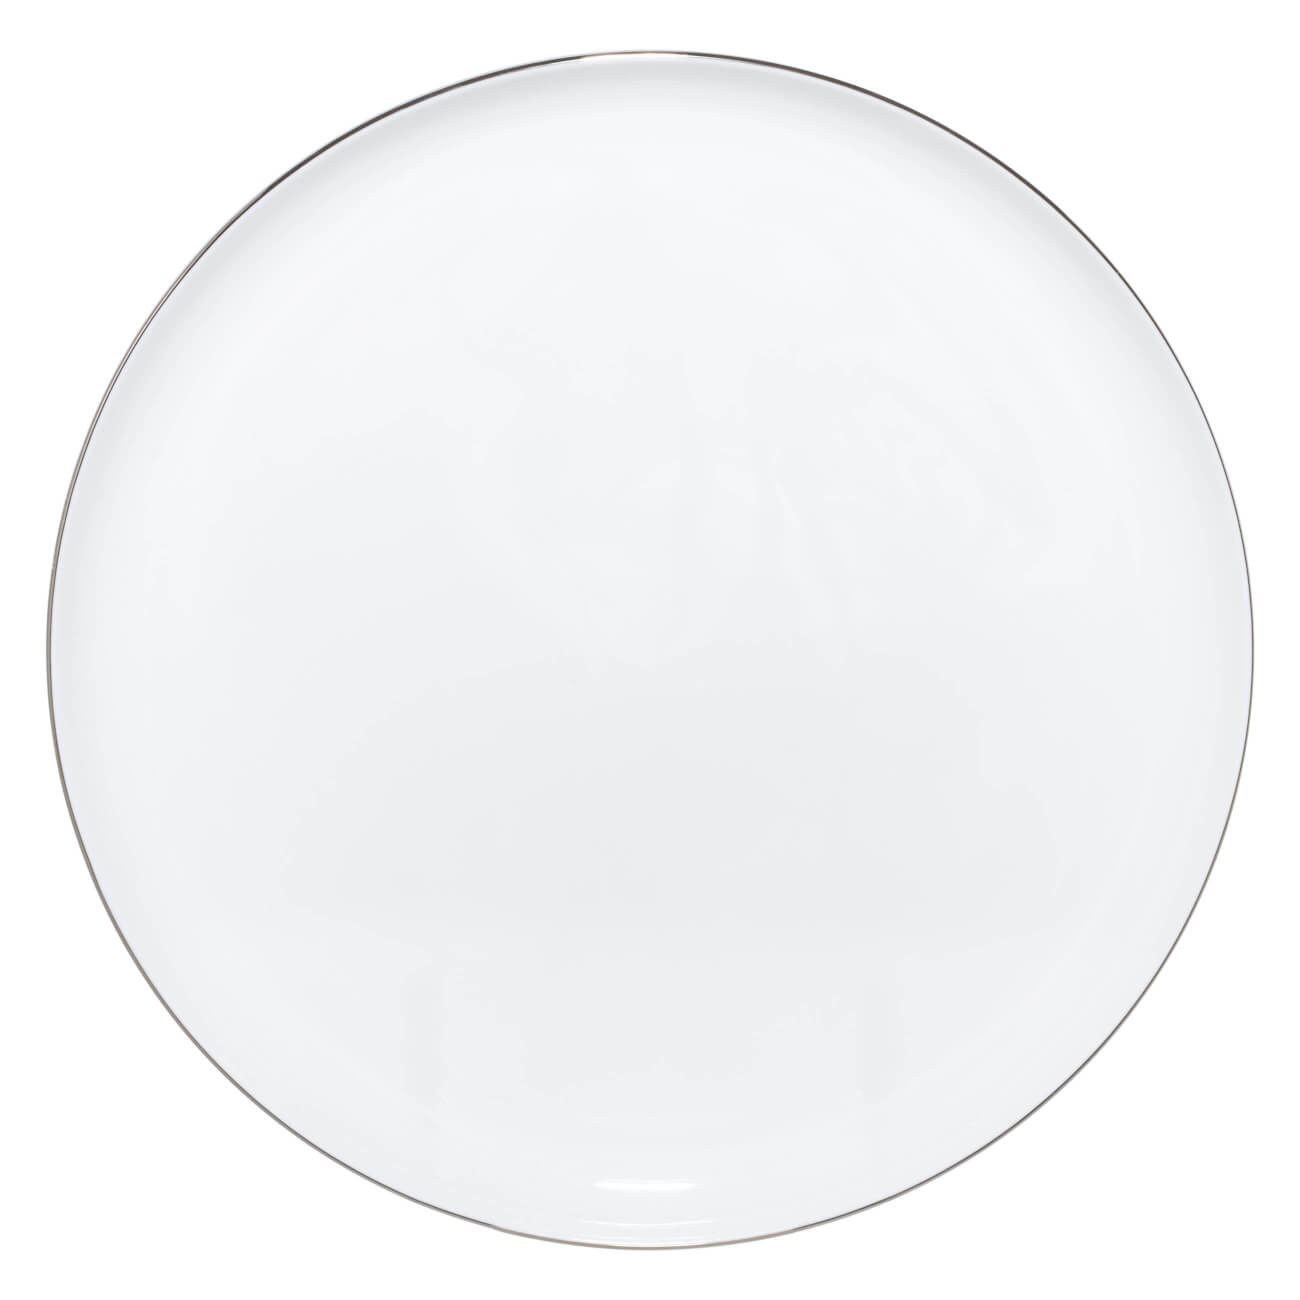 Тарелка обеденная, 28 см, фарфор F, Antarctica обеденная тарелка walmer